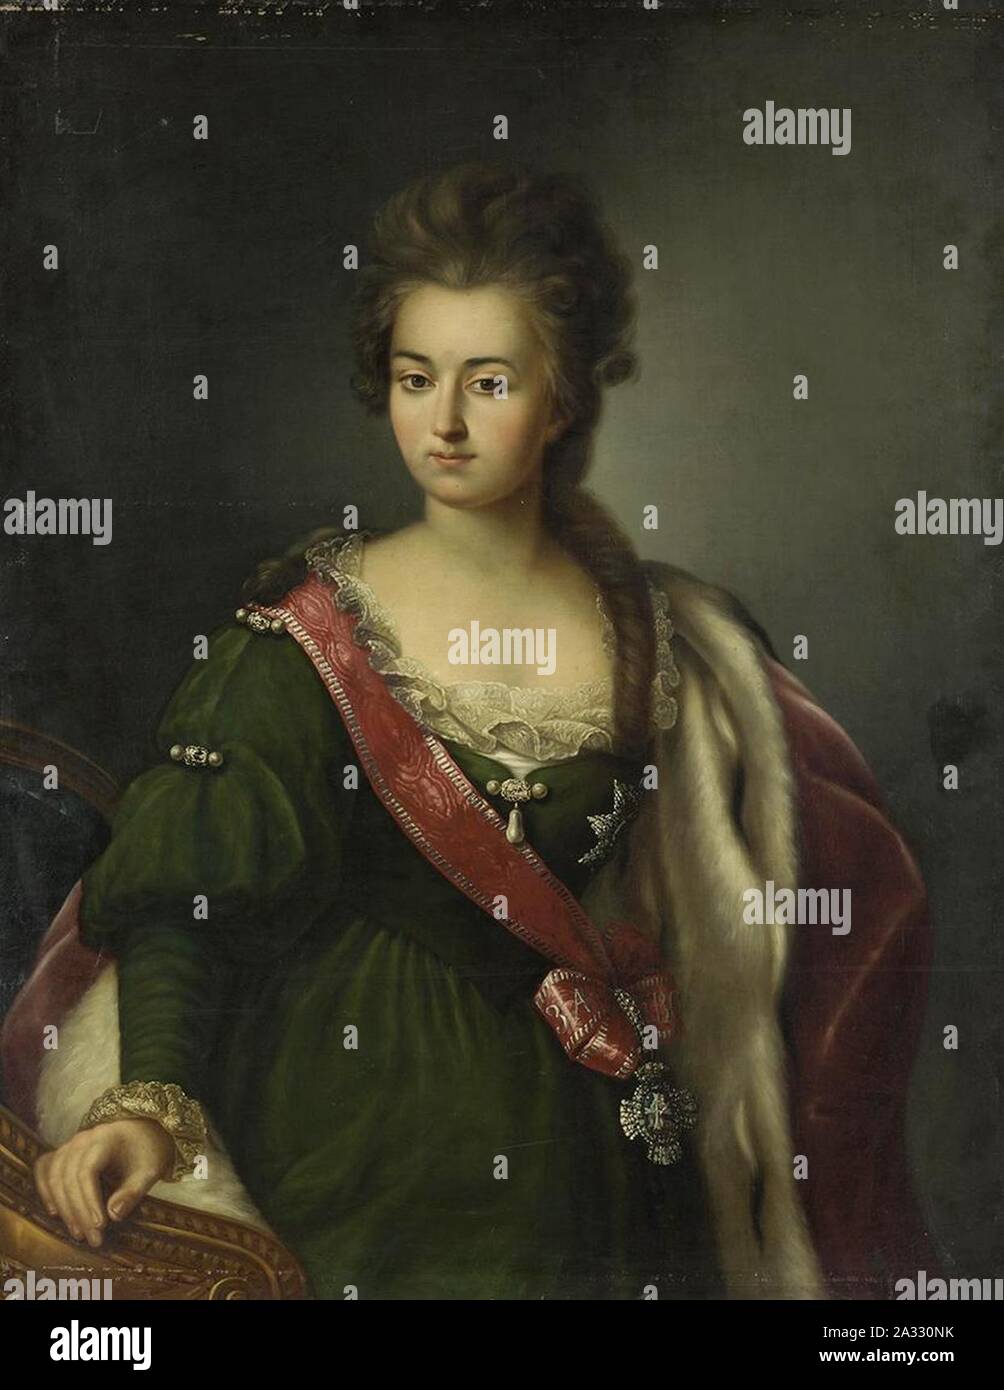 Evdokija Borisovna Jusupova duchess of Courland. Stock Photo